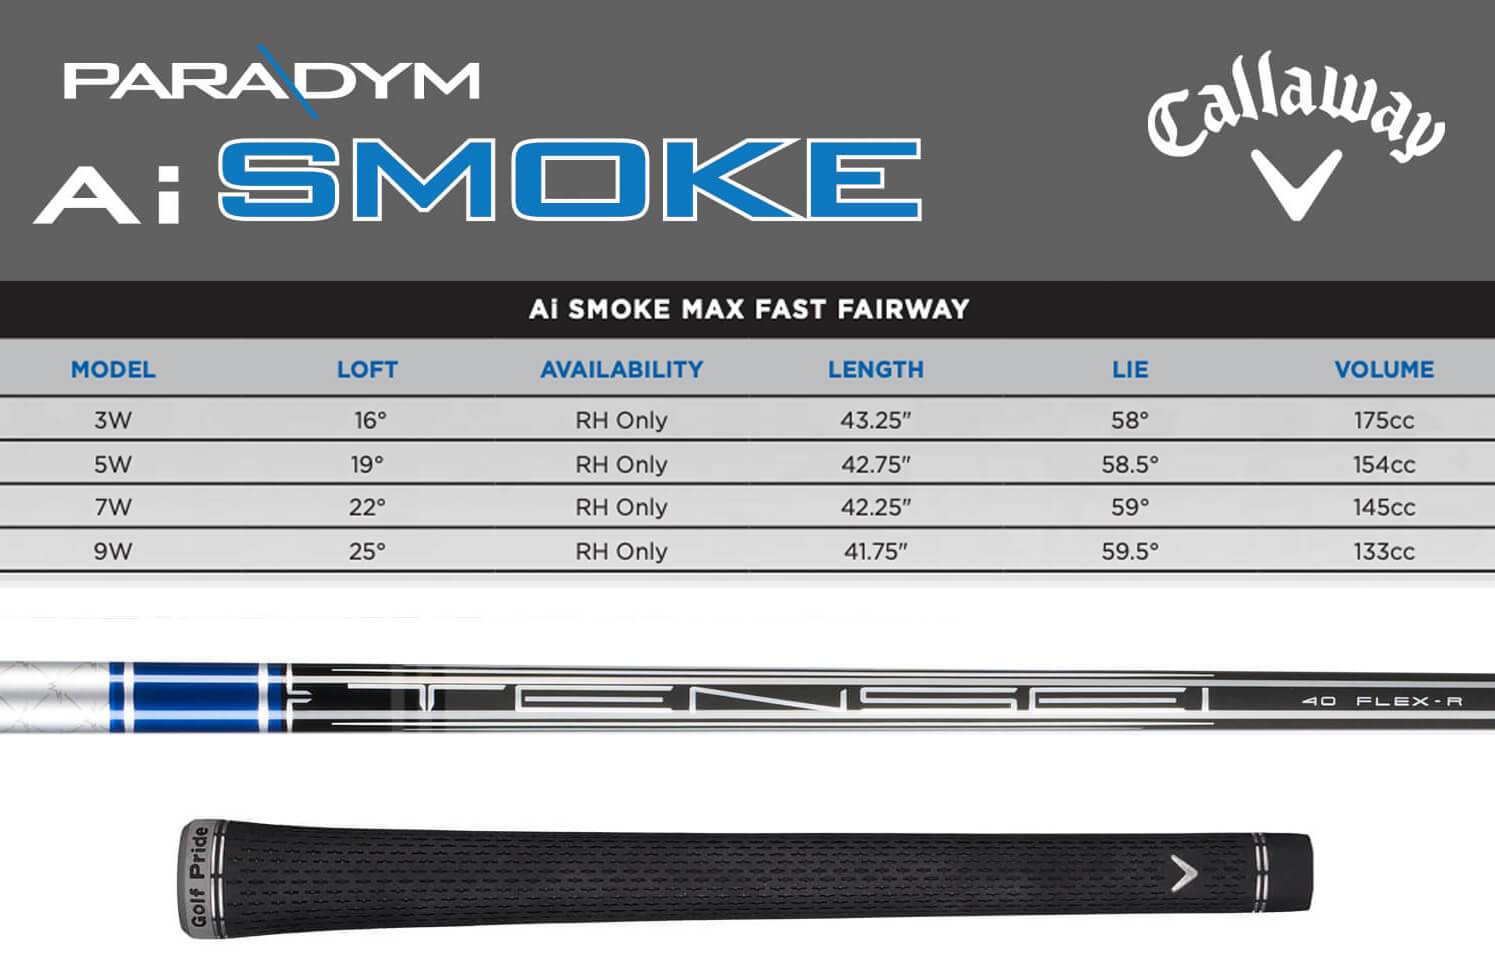 Specification for Callaway Paradym Ai Smoke Max Fast Golf Fairway Wood